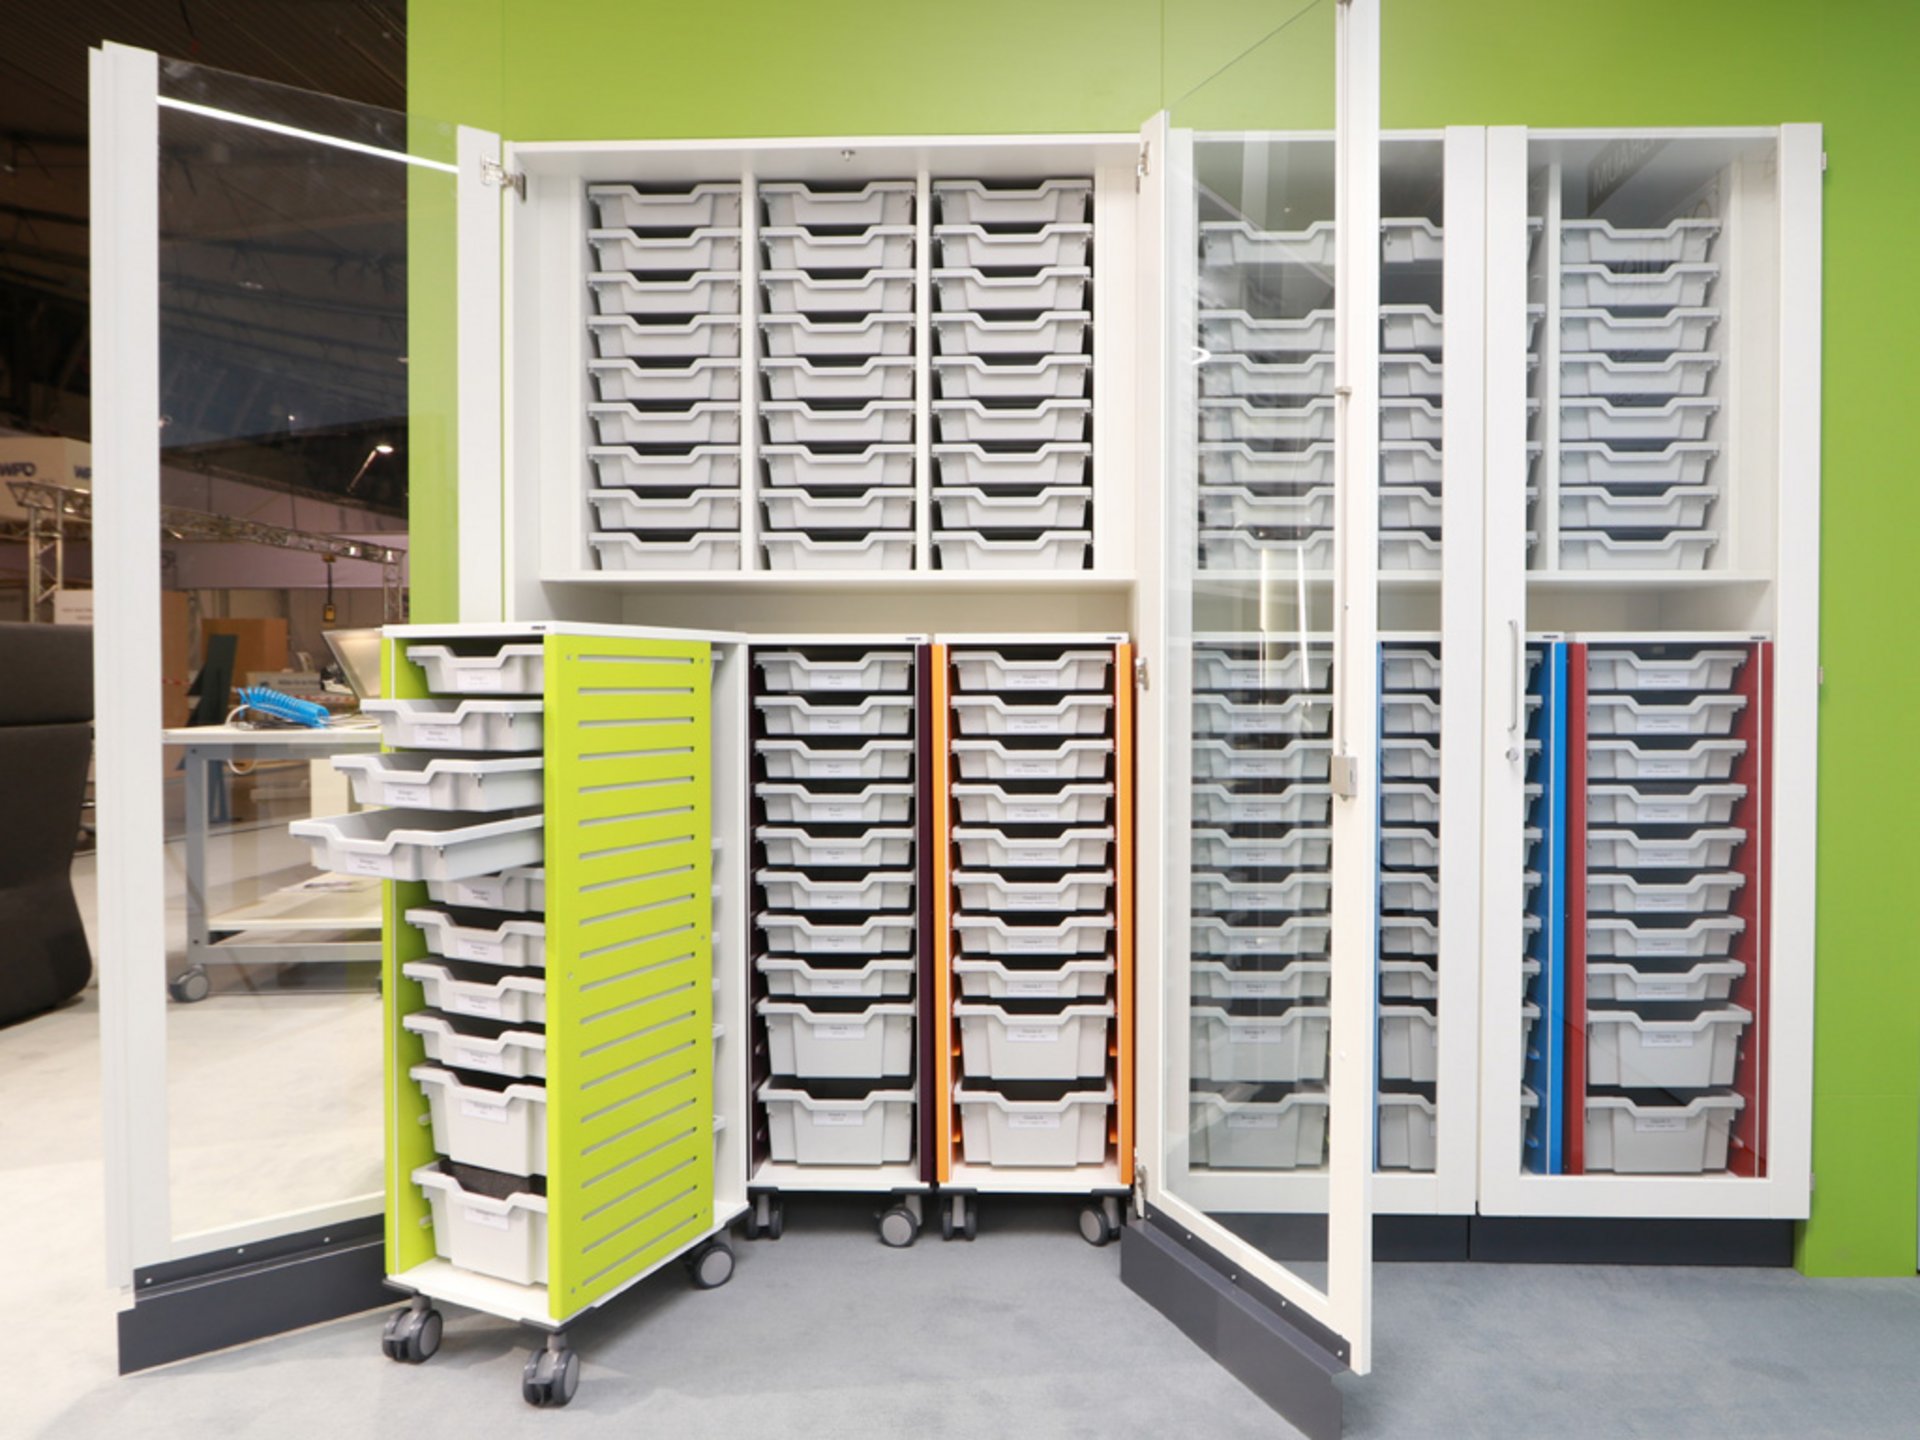 Imgae: Practical Hohenloher garage cabinets